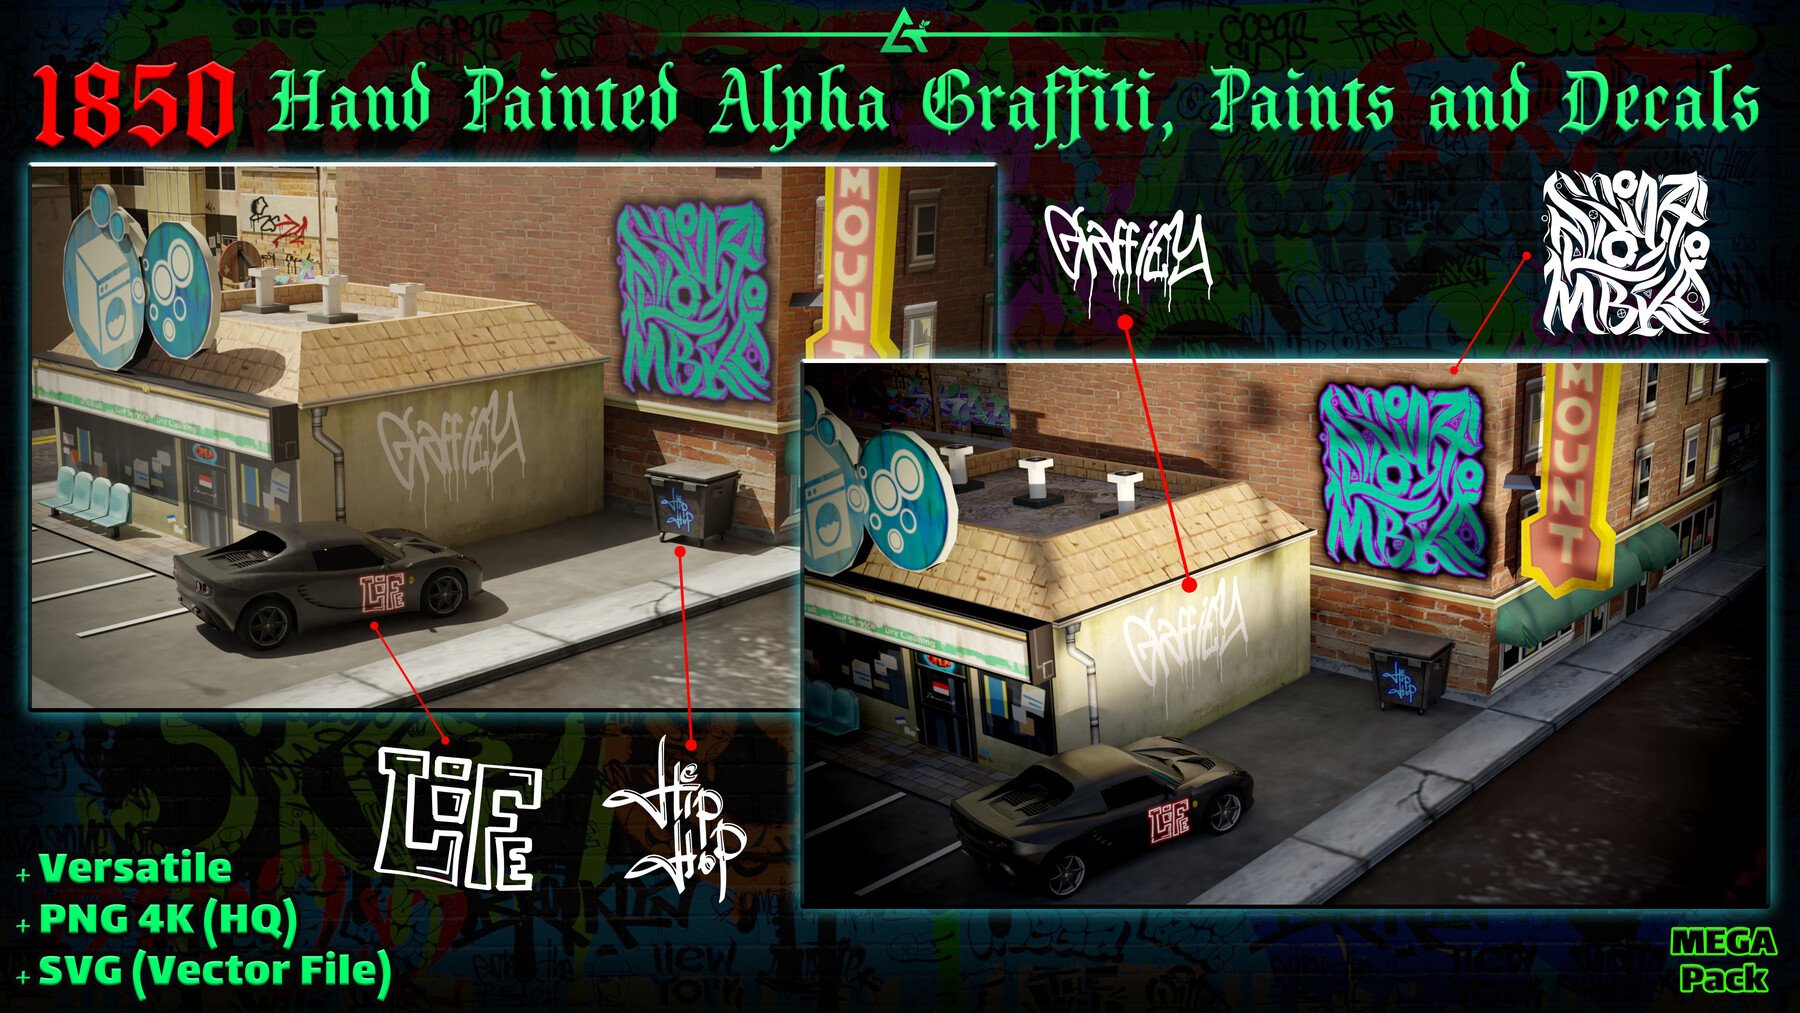 759个手绘涂鸦贴花Alpha通道无缝贴图合集759 Hand Painted Alpha Graffiti, Paints & Decals (MEGA Pack)